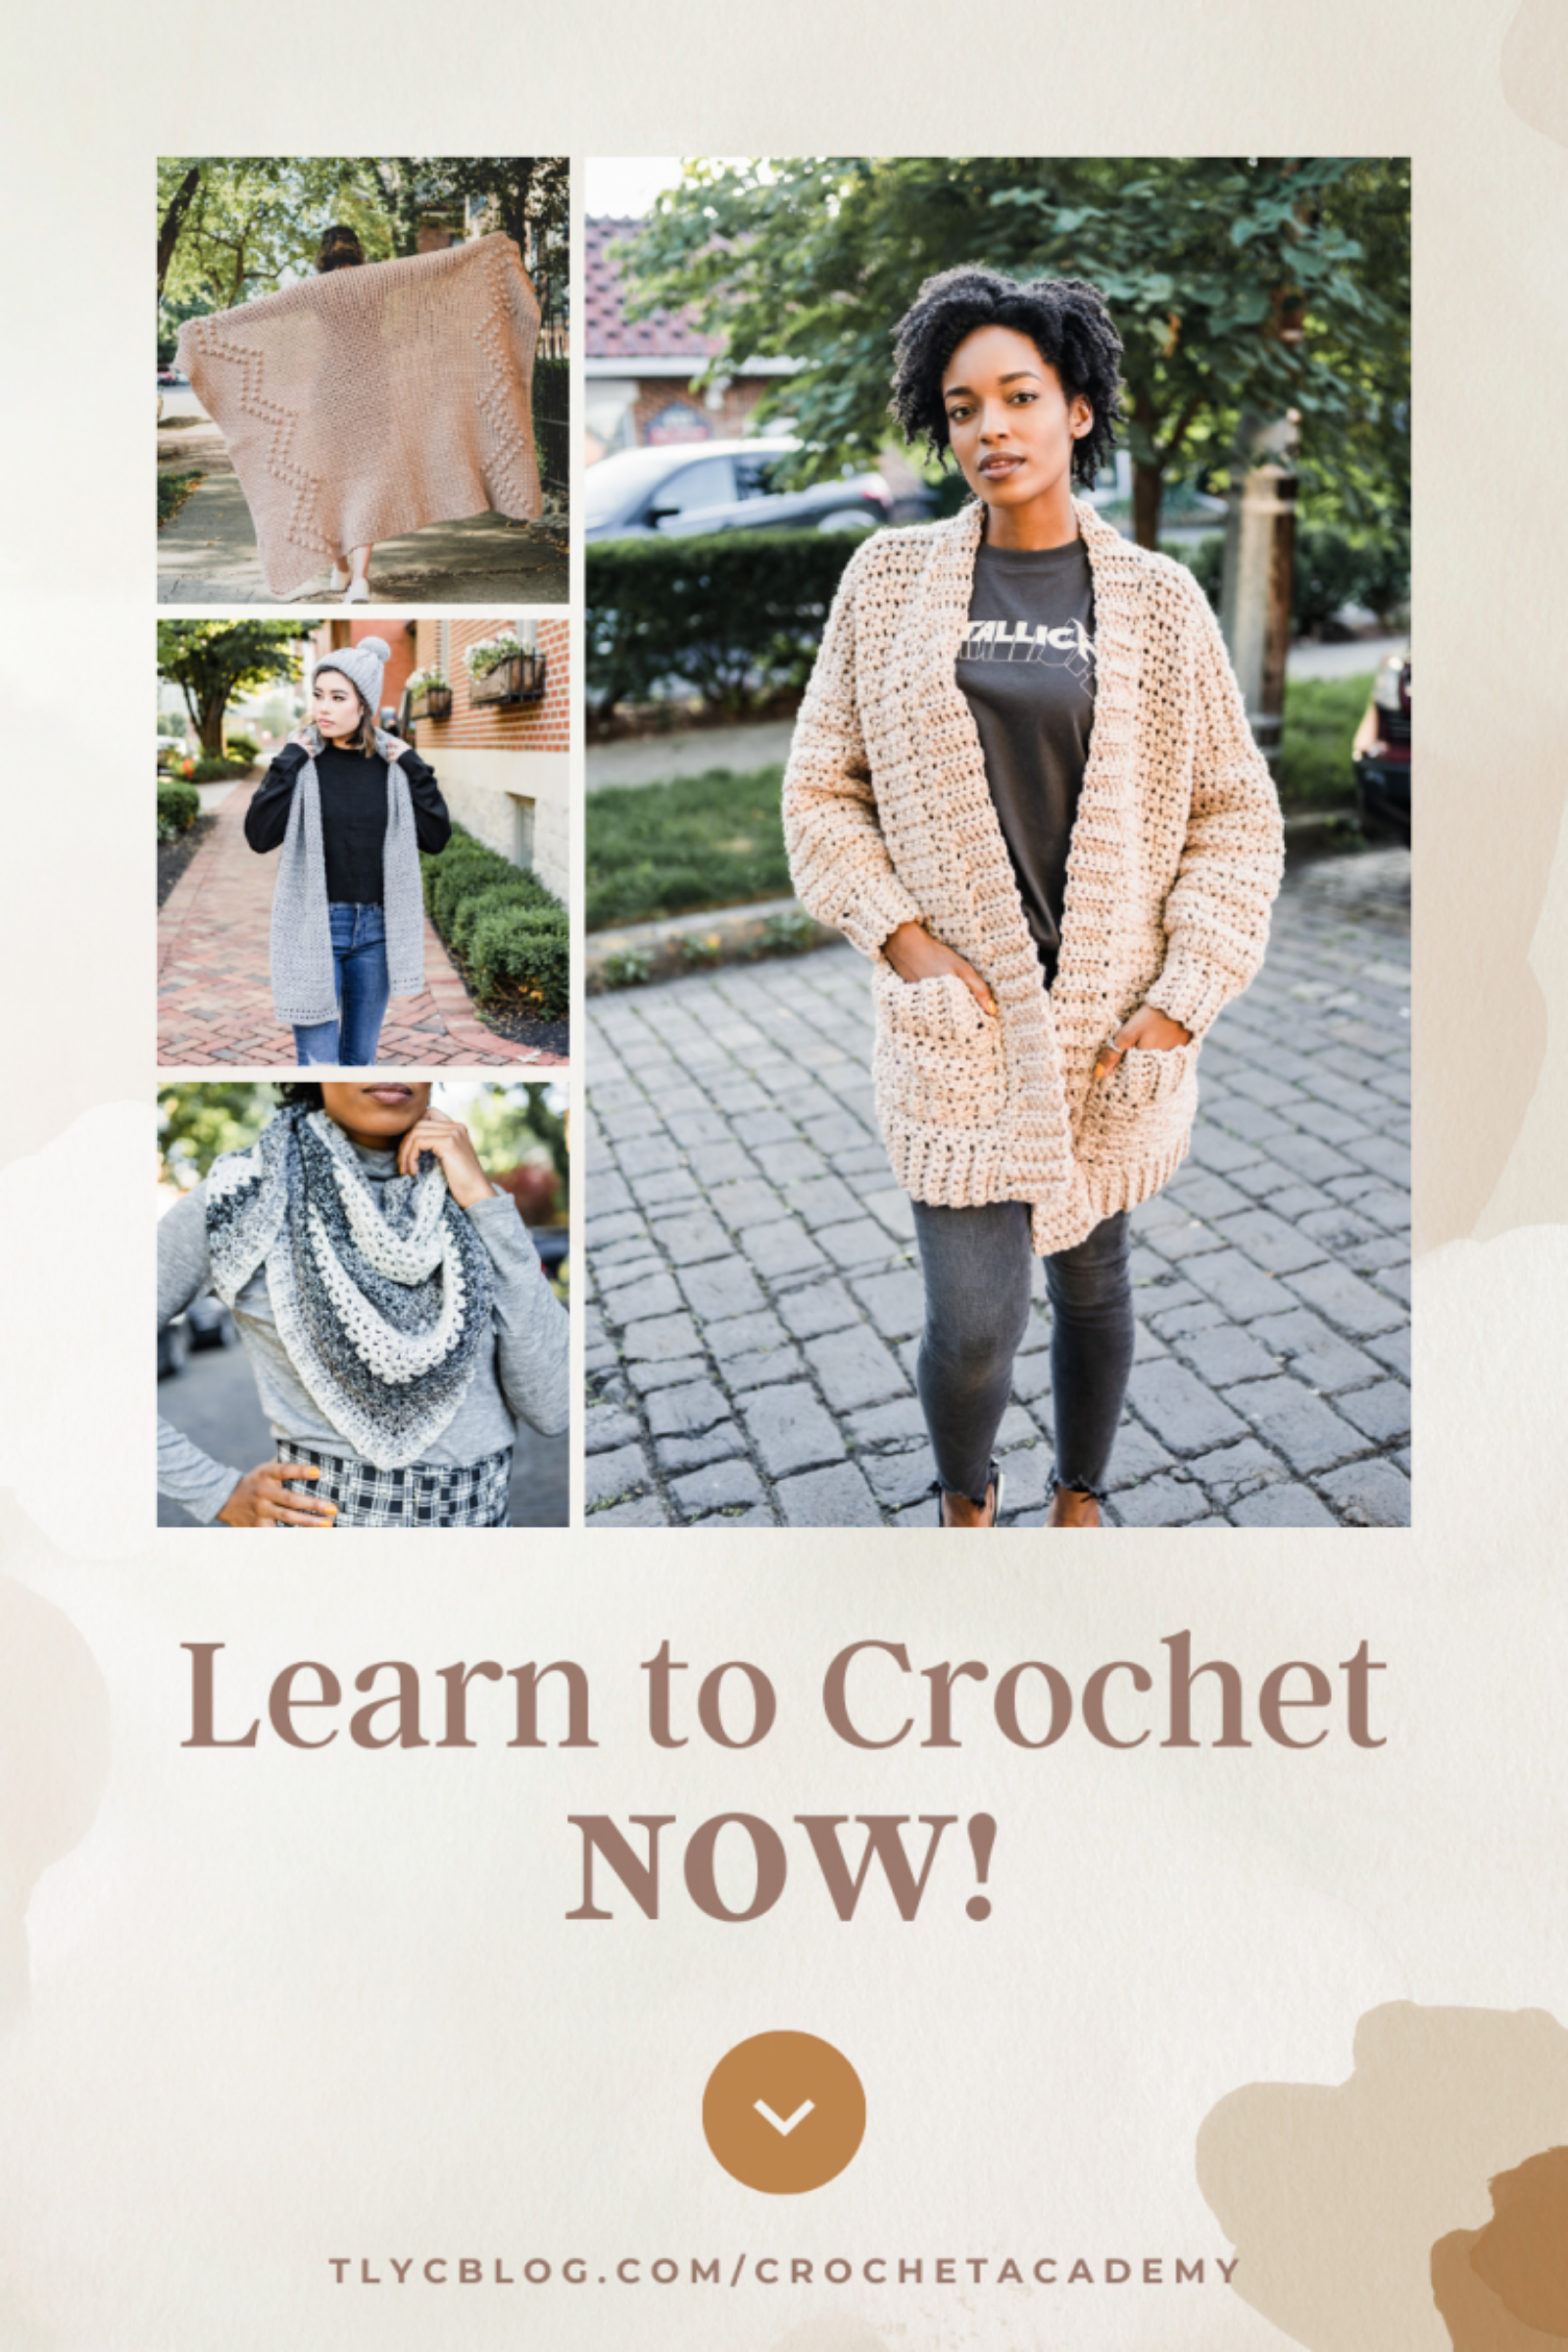 Crochet Academy